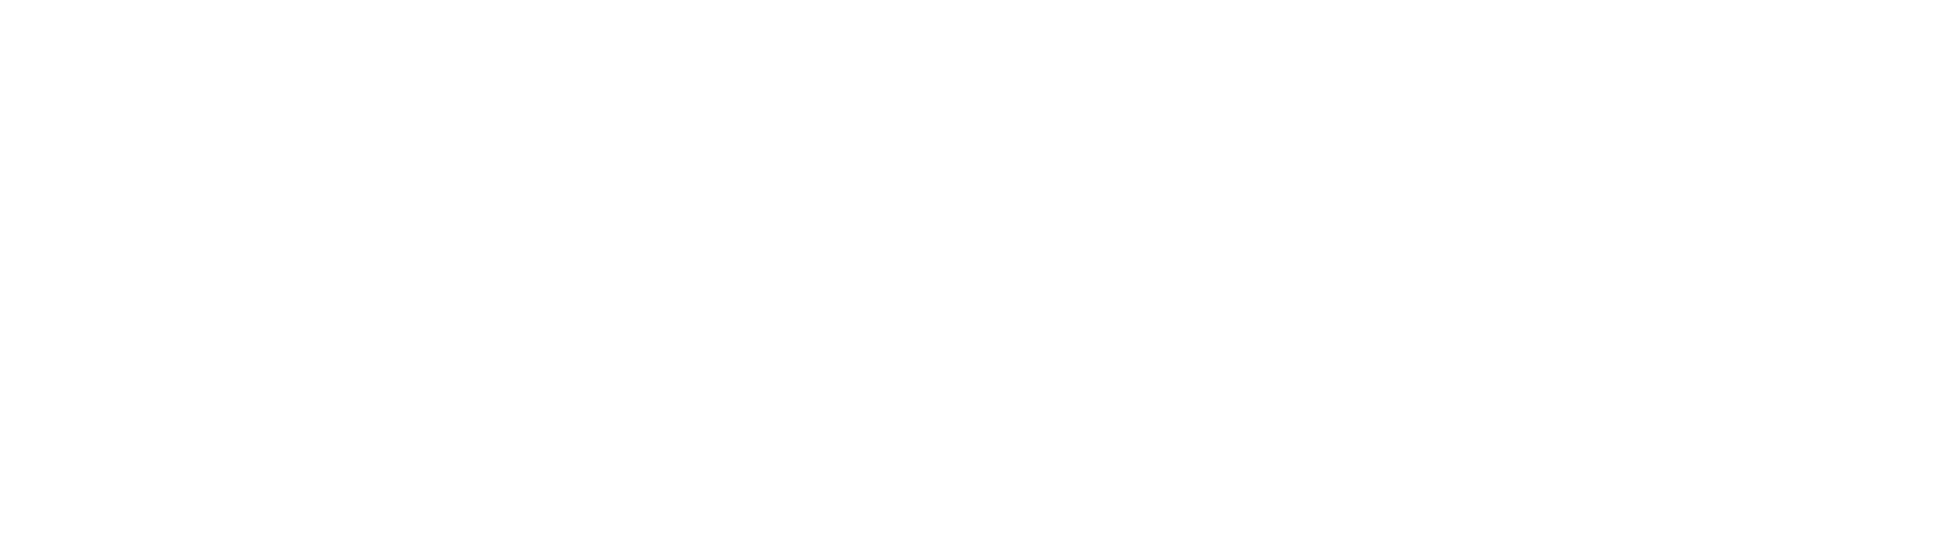 TekSystems monochrome logo